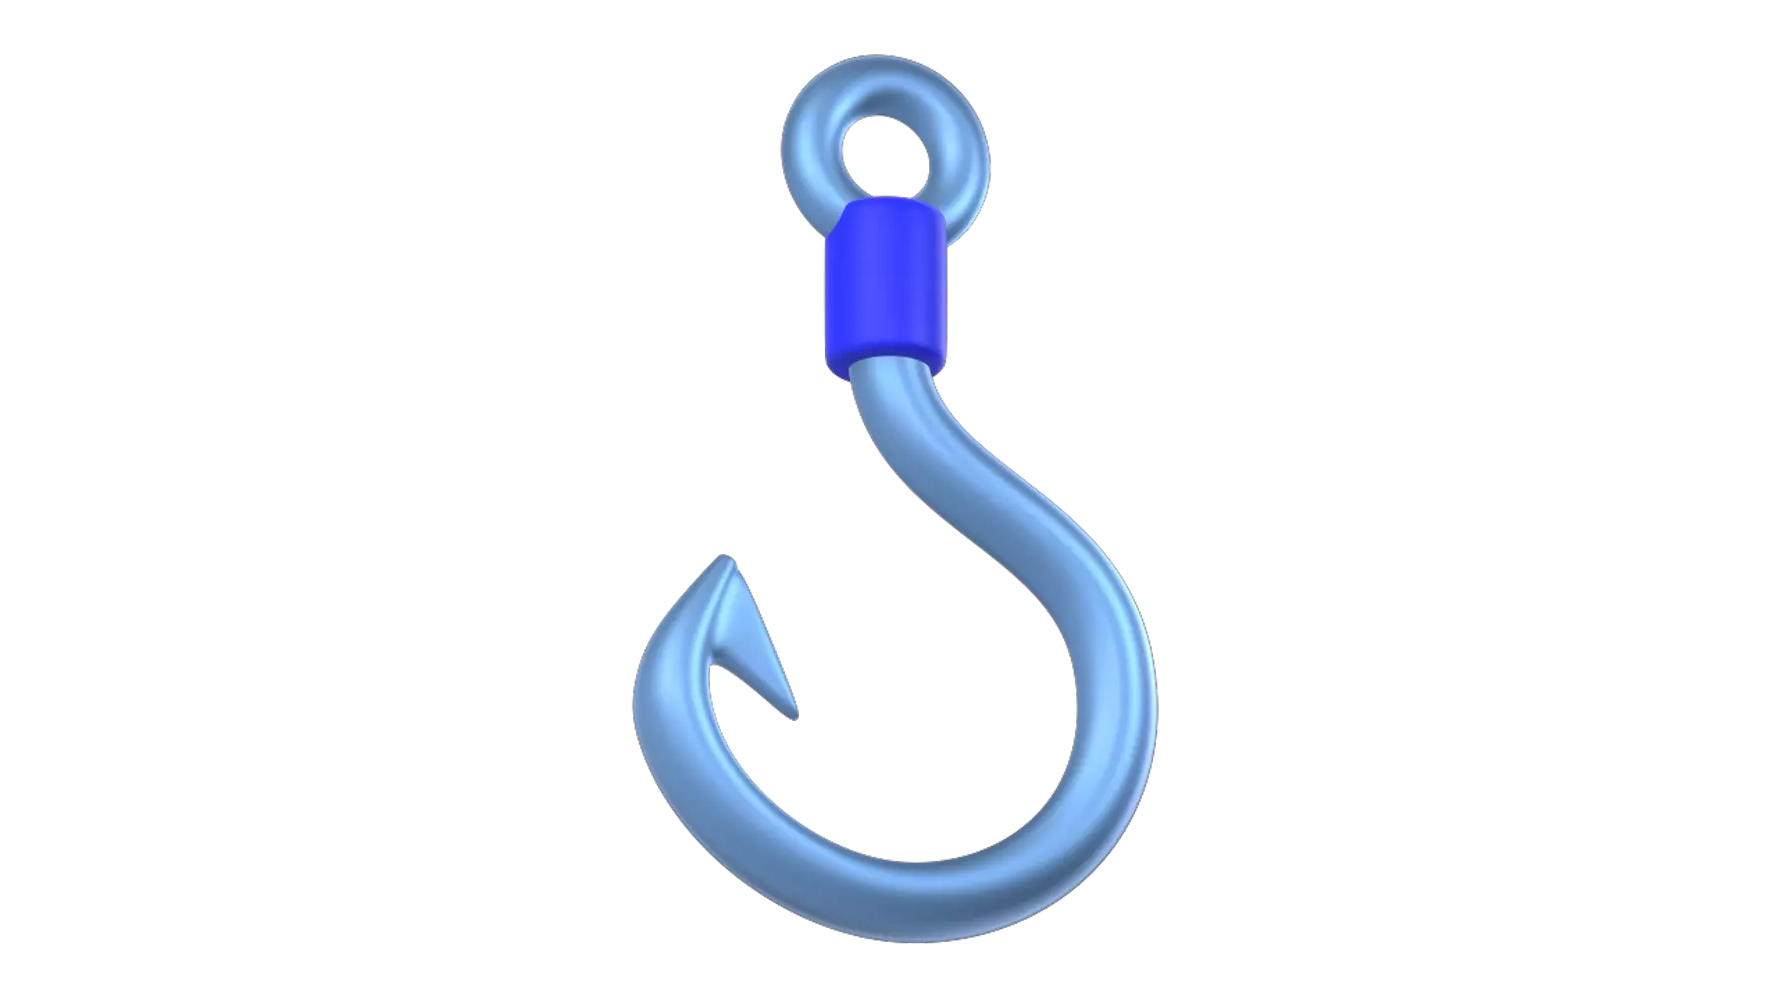 Hook 3D Graphic